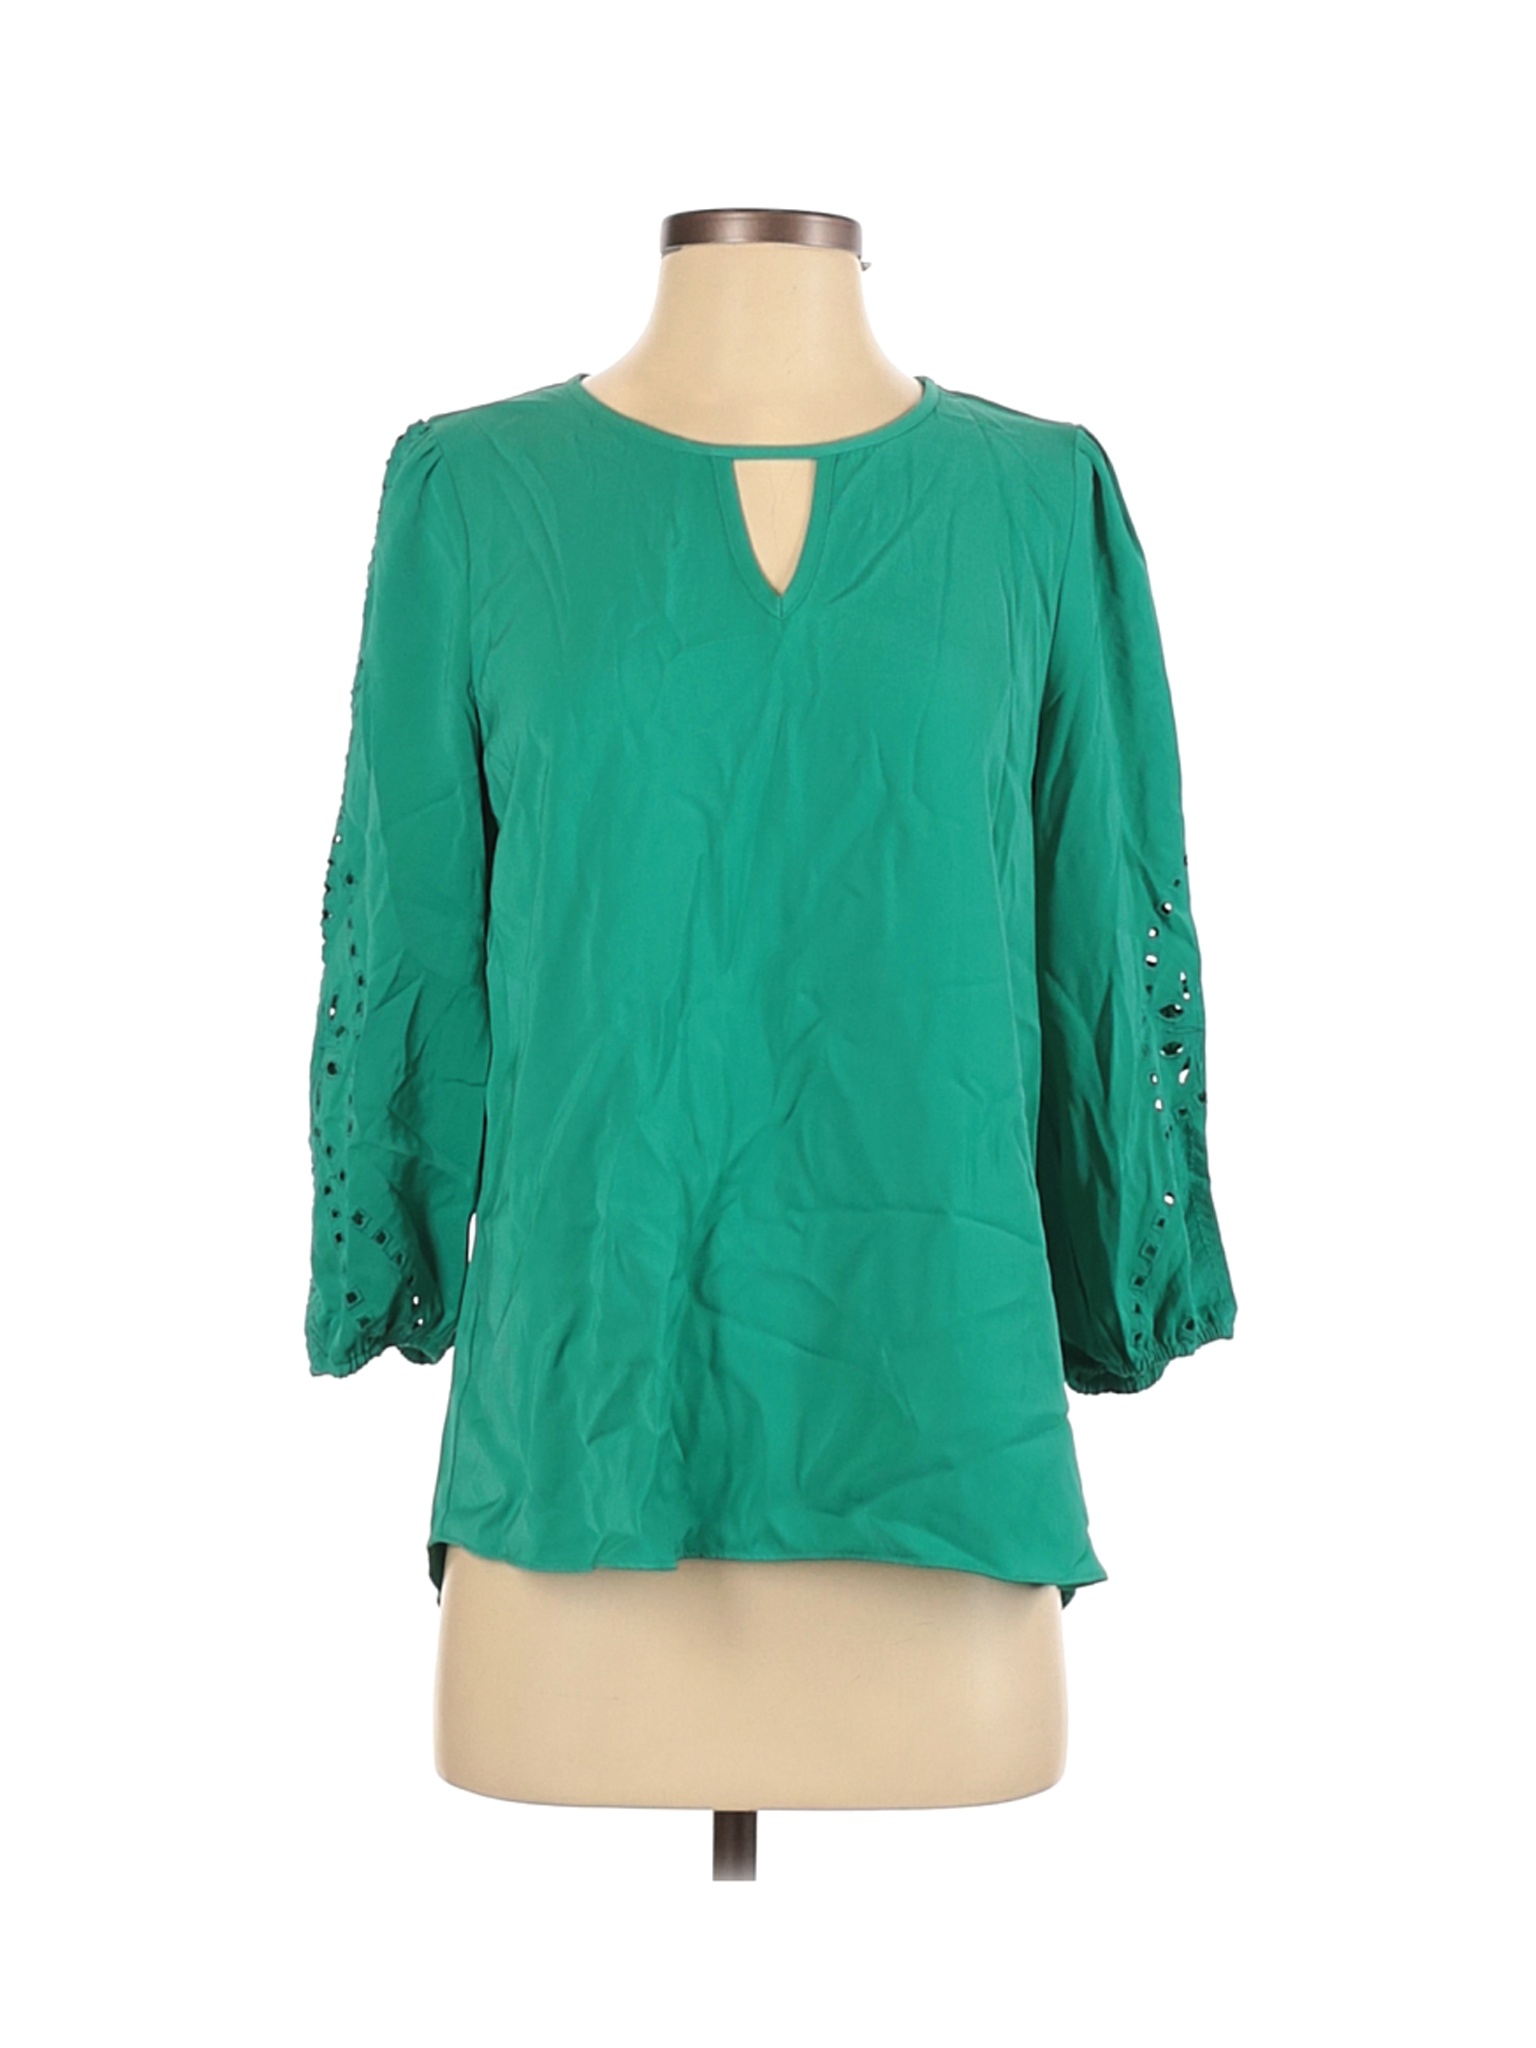 Market and Spruce Women Green 3/4 Sleeve Blouse S | eBay